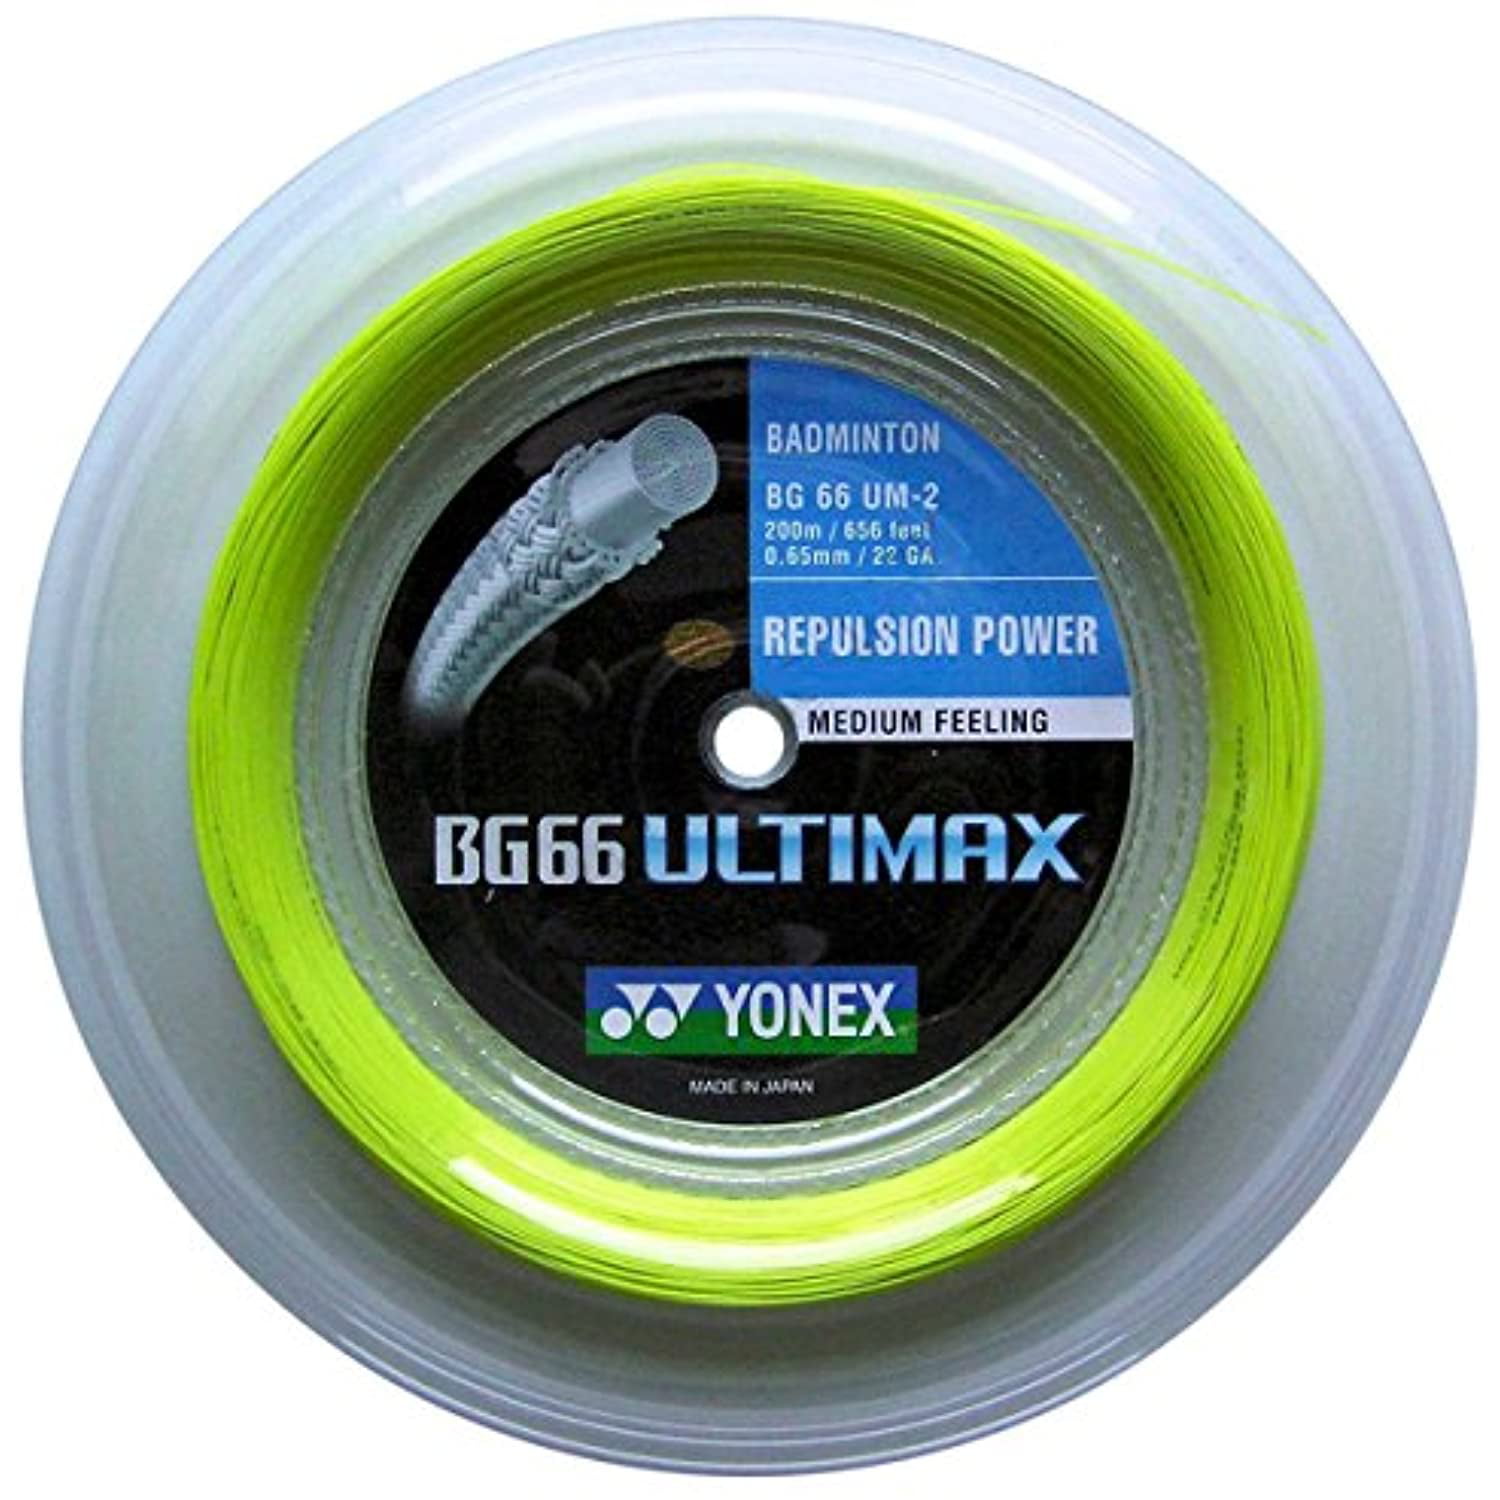 Yonex BG66 Ultimax Badminton Strings 